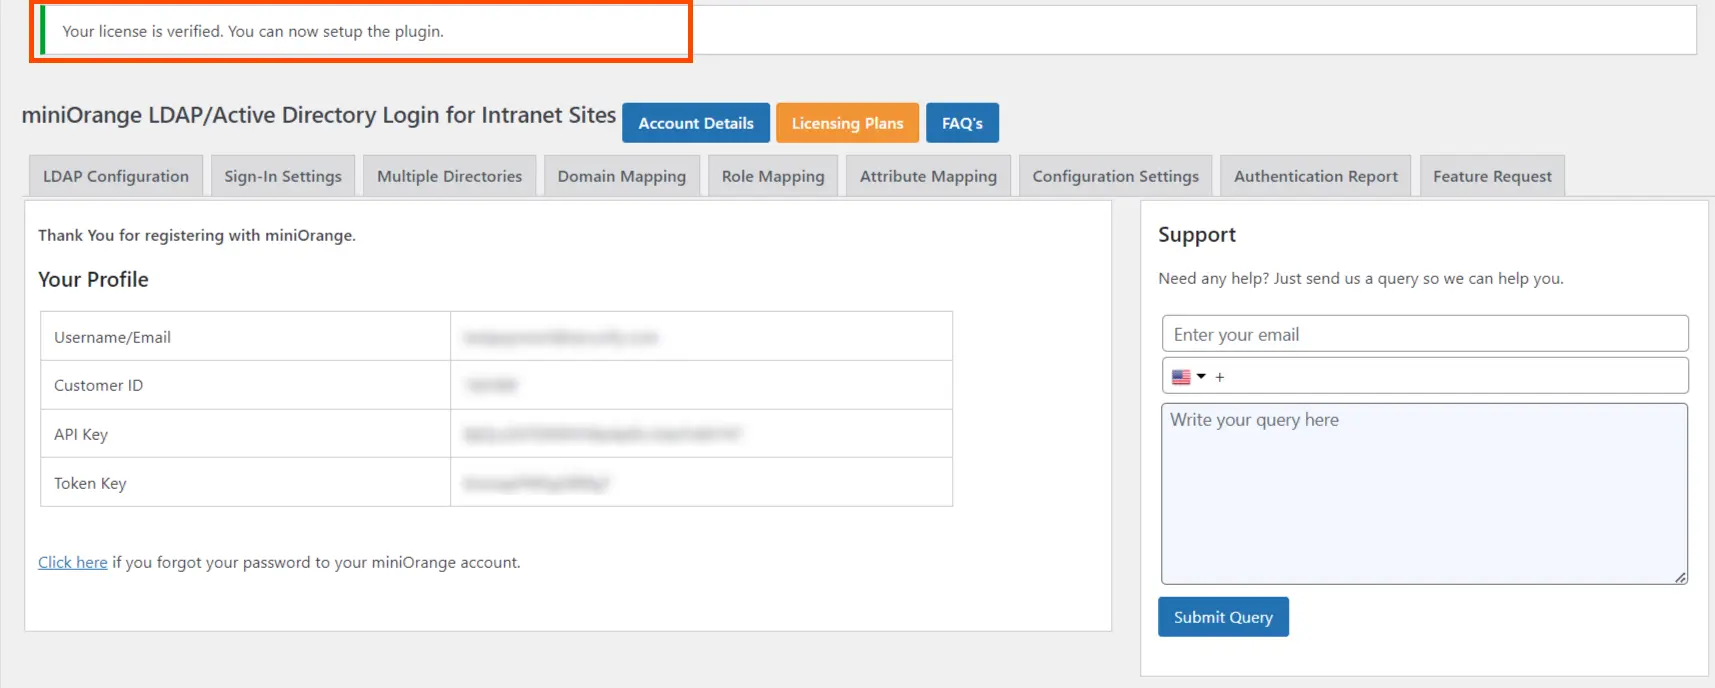 LDAP Active Directory login for intranet sites user profile.